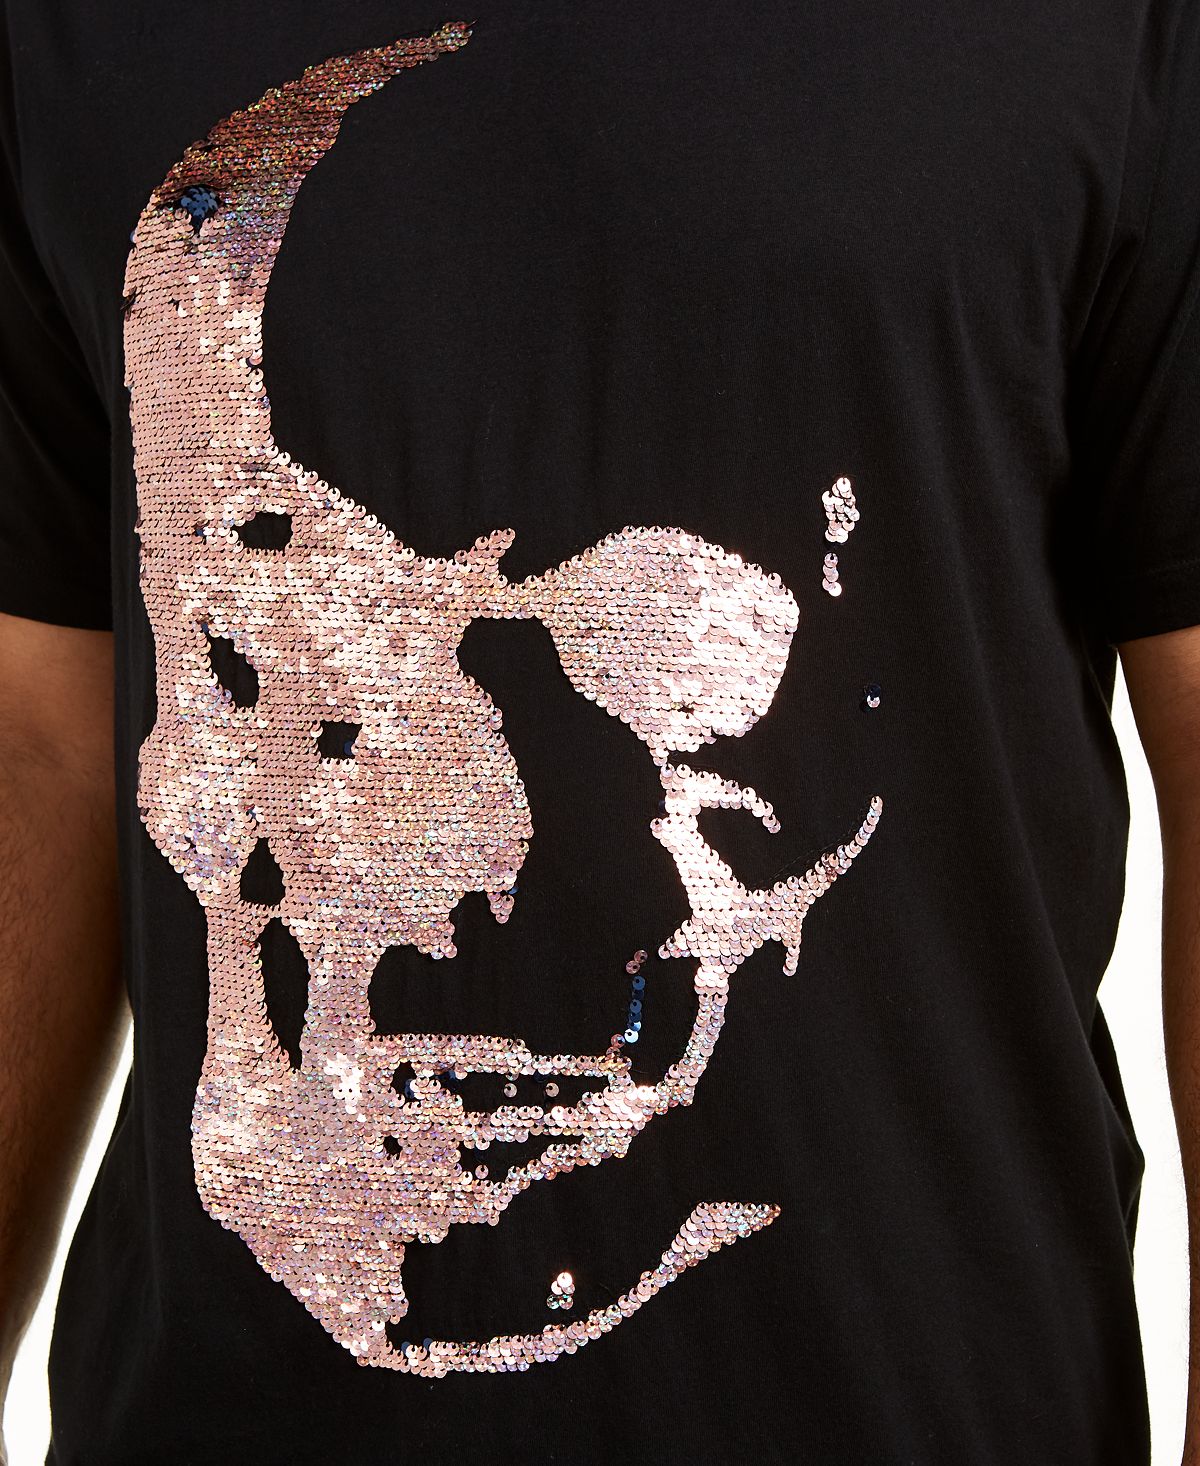 Inc International Concepts I.n.c. Big & Tall Renew Sequin Skull T-shirt Deep Black